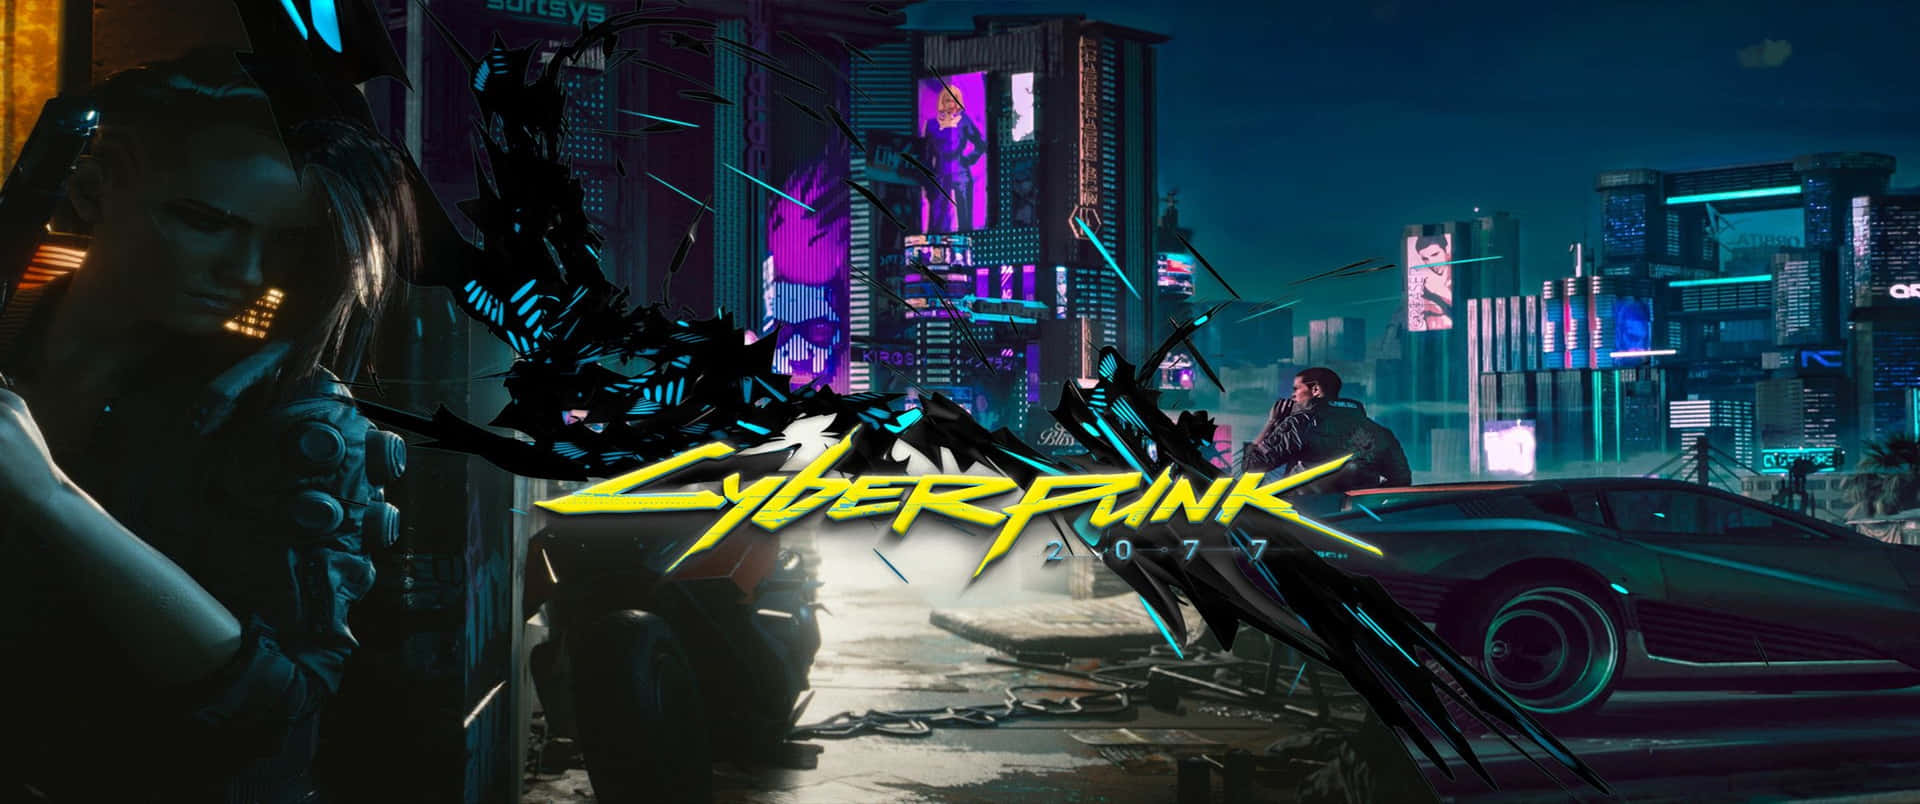 3440x1440p Cyberpunk 2077 Hintergrundbilder